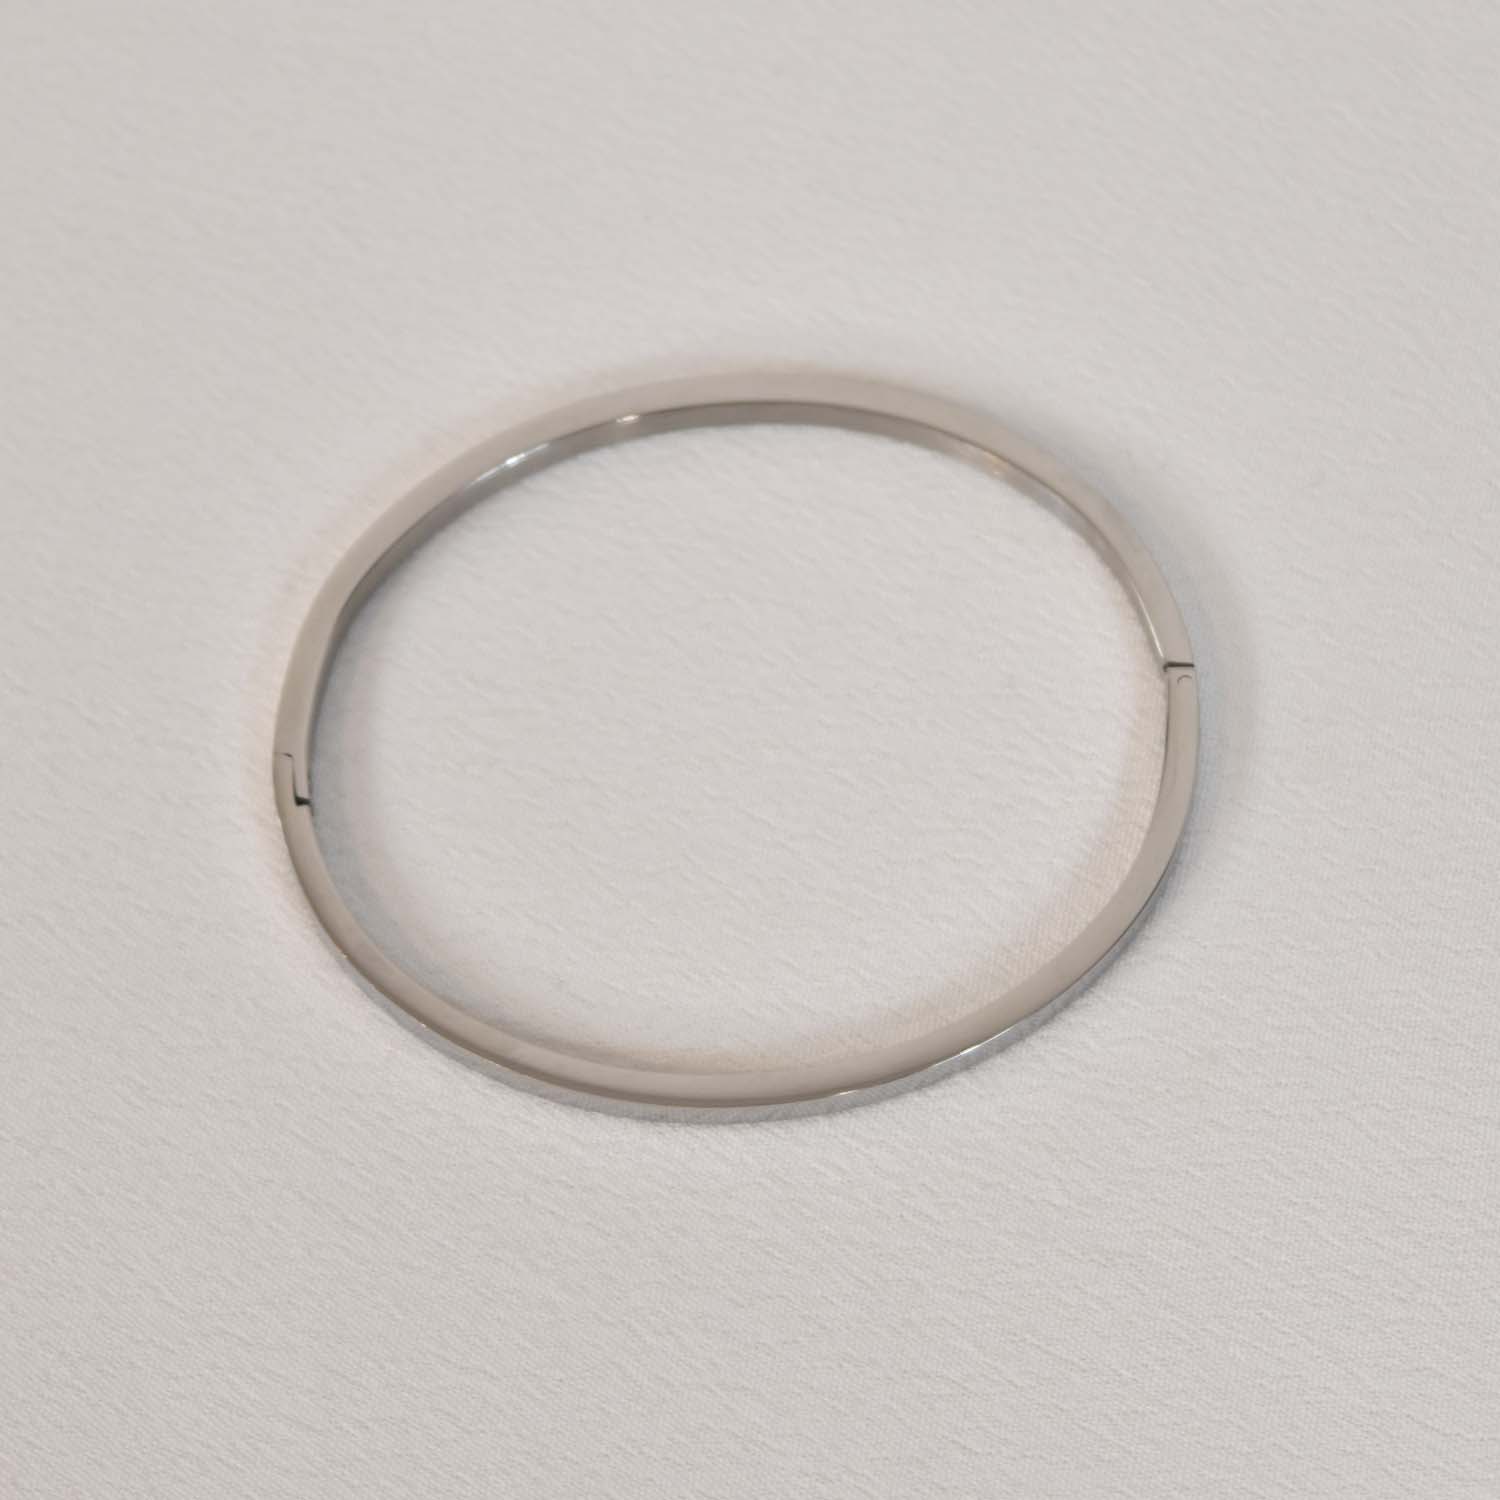 Thin silver bracelet
